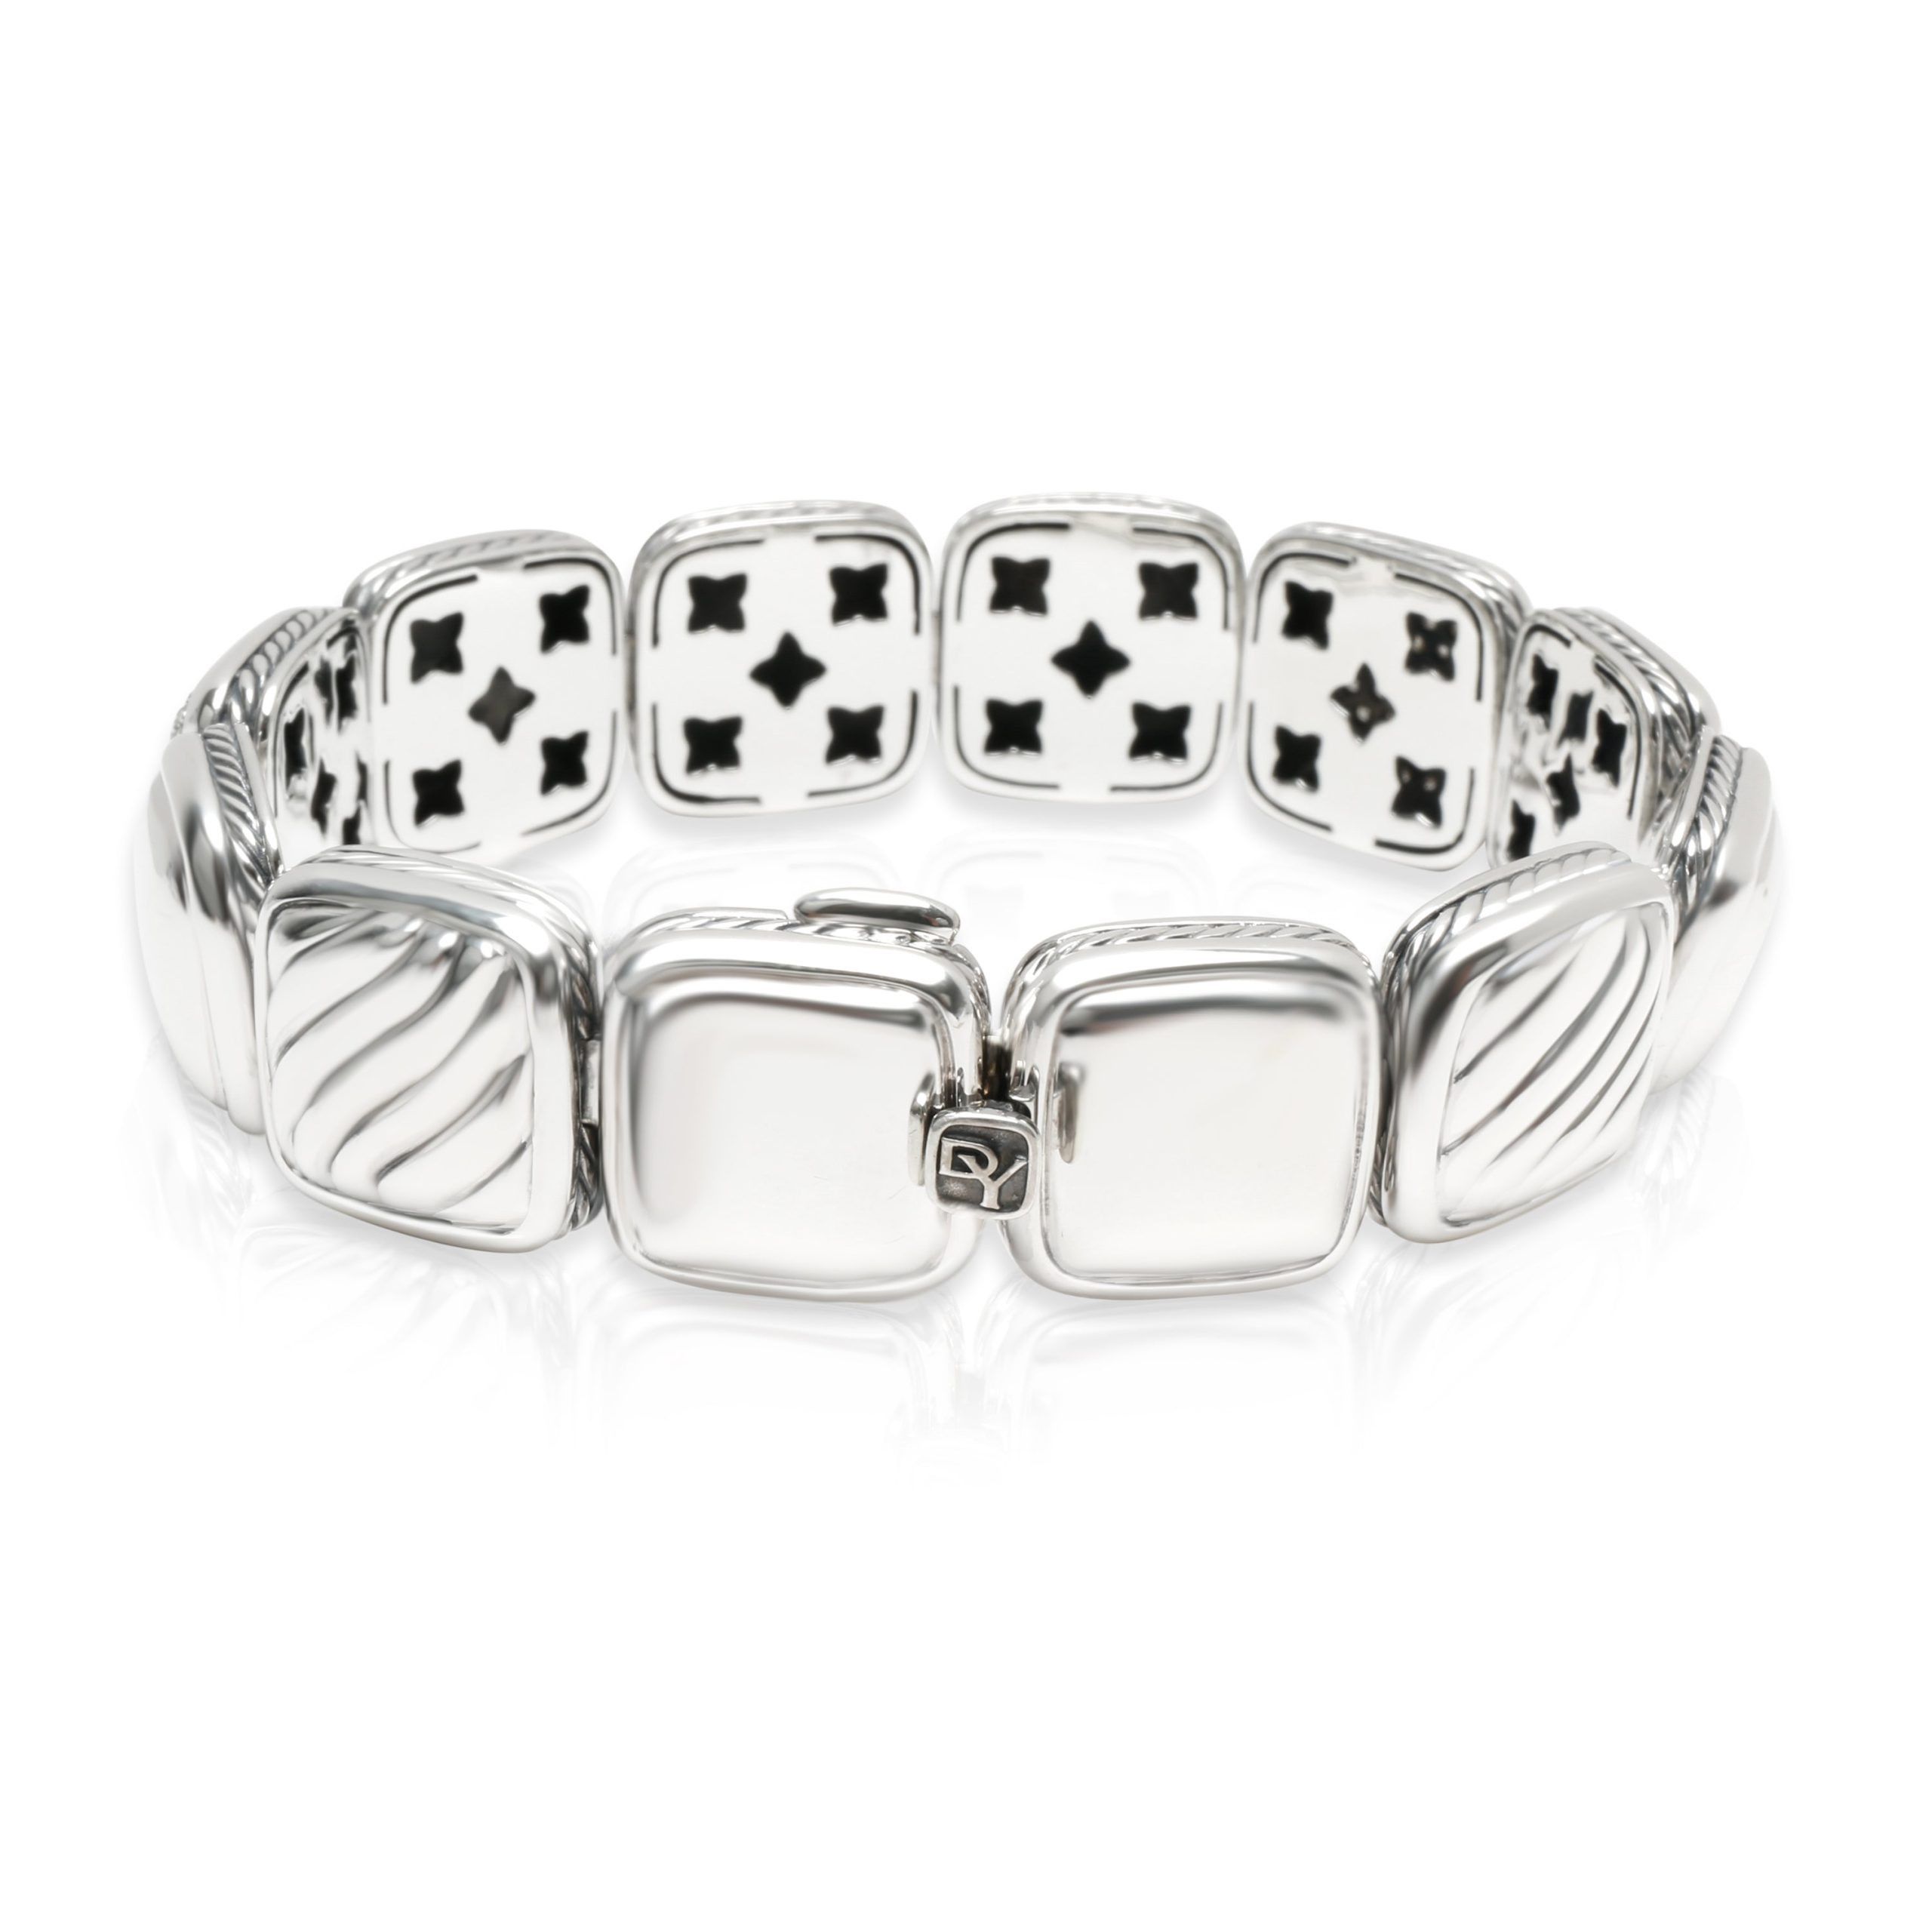 David Yurman David Yurman Chiclet Diamond Bracelet in Sterling Silver 1.75 CTW Size ONE SIZE - 3 Preview